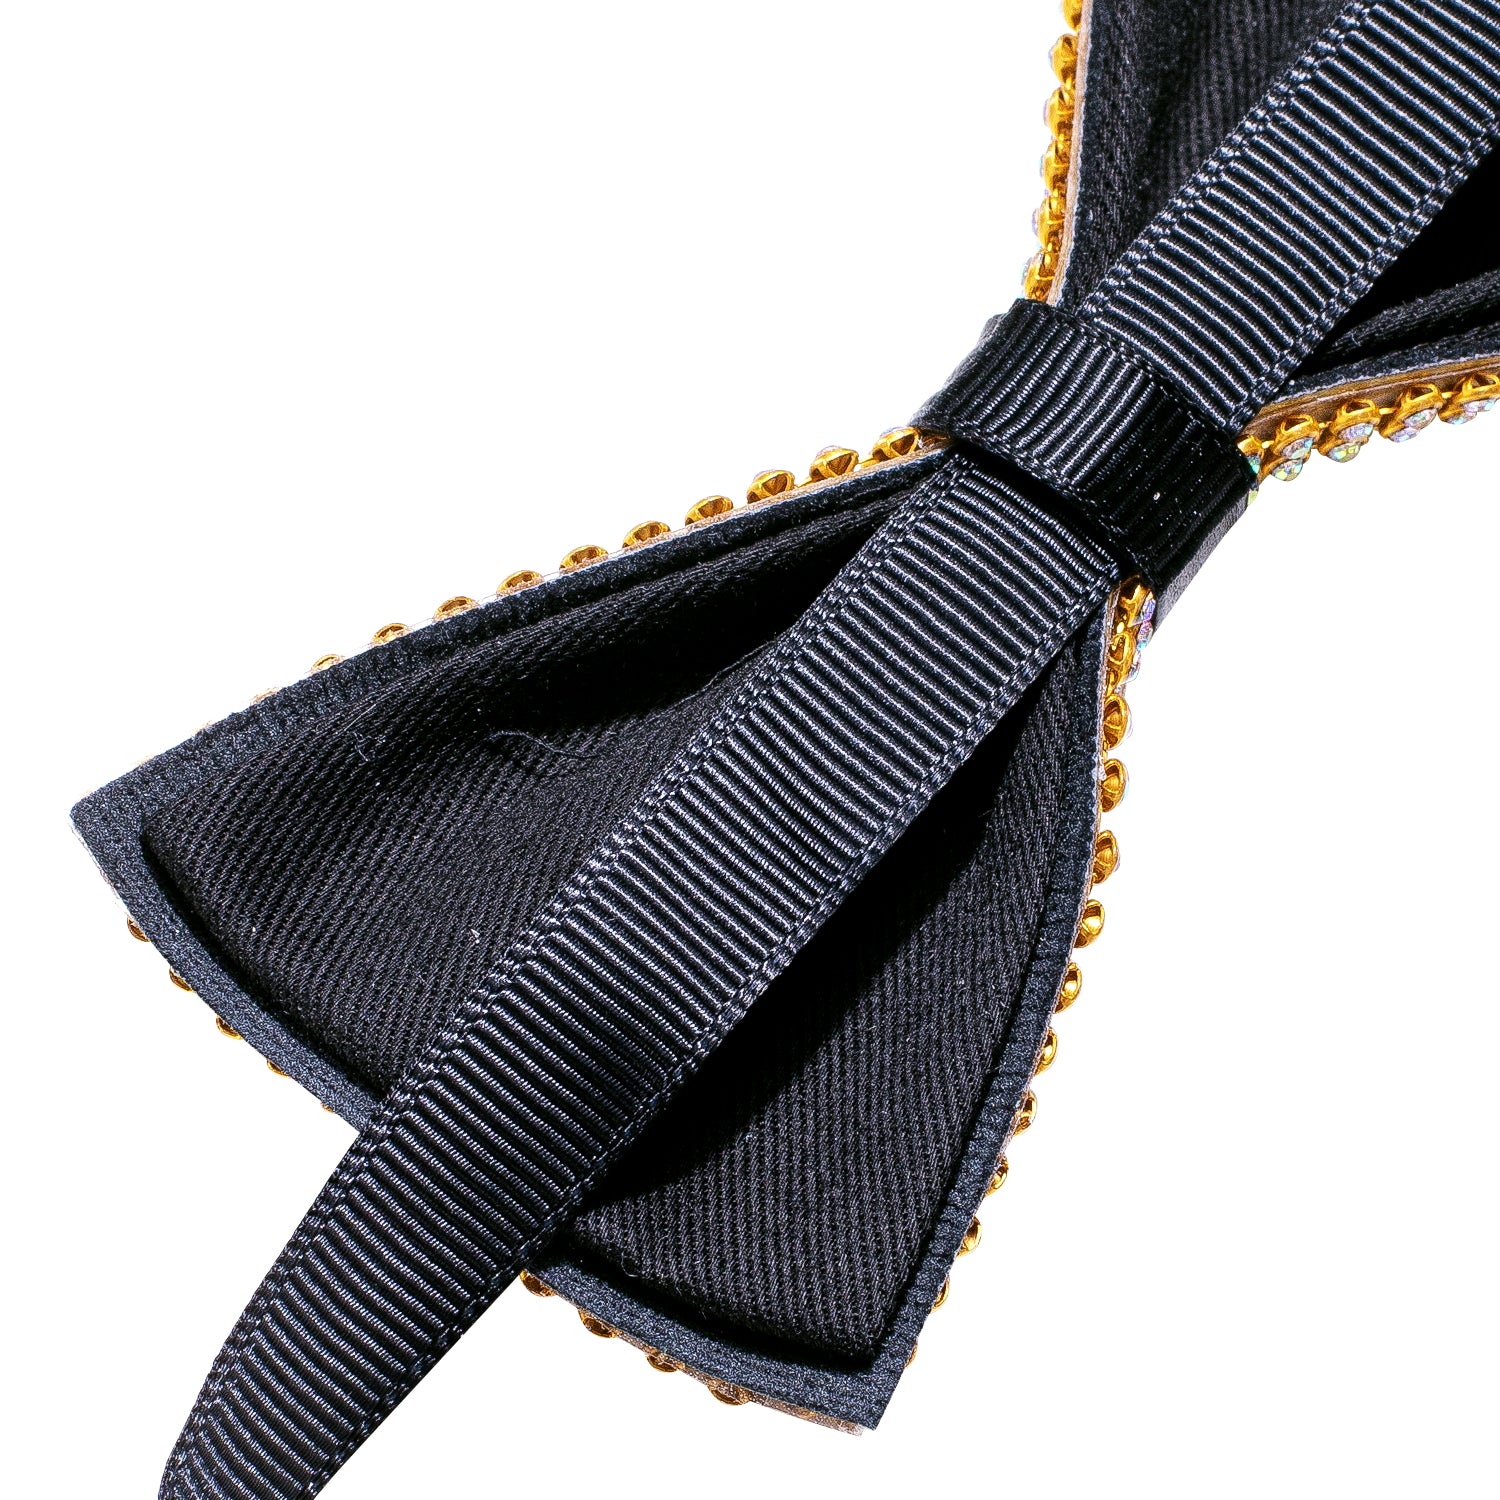 Luxury Golden Yellow Shining Rhinestone Pre-tied Adjustable Length Bow Tie